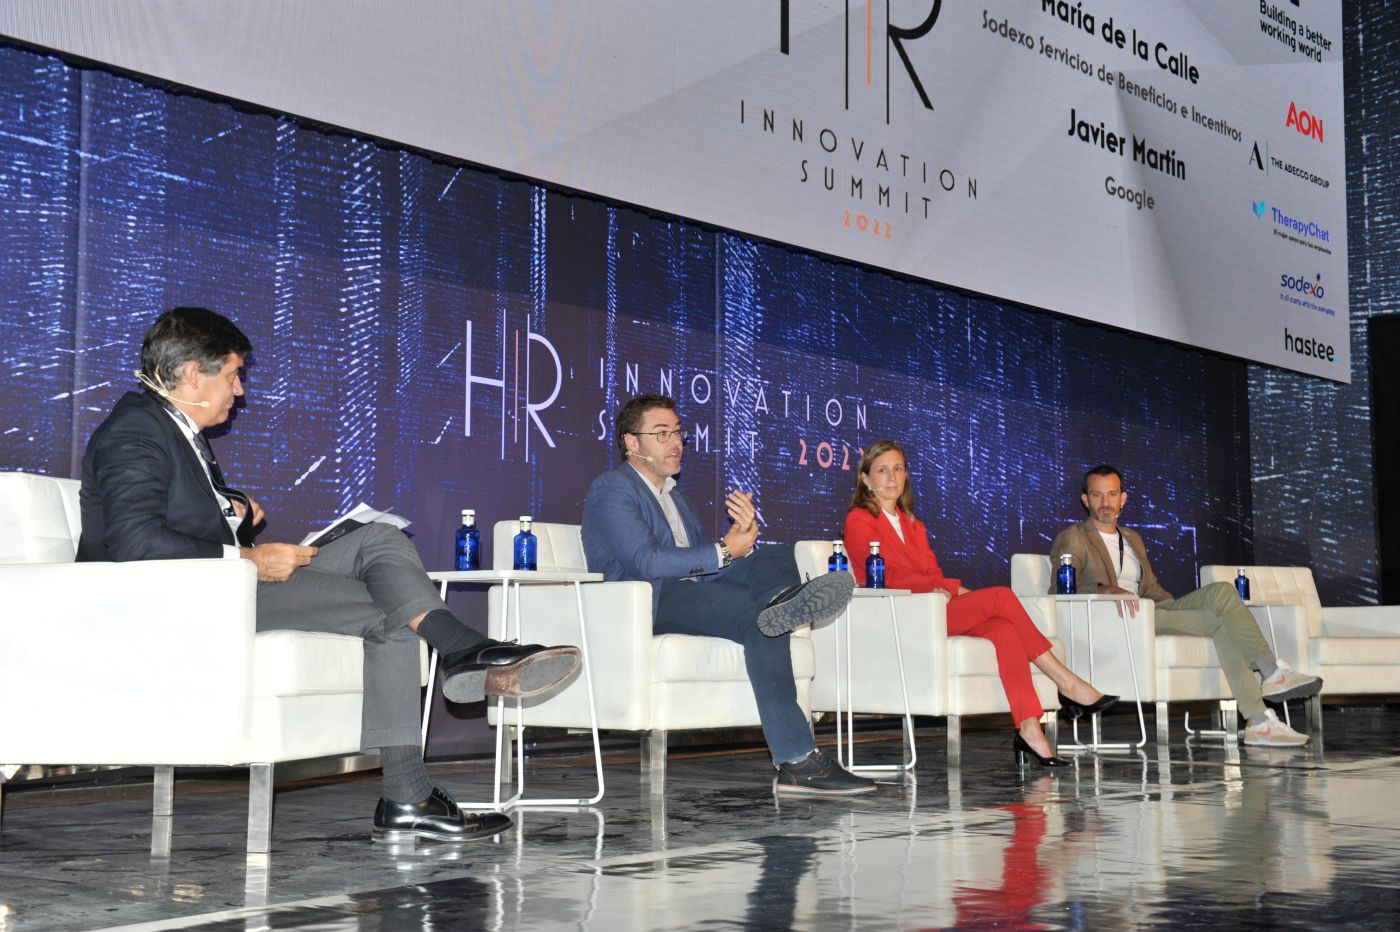 HR Innovation Summit 22